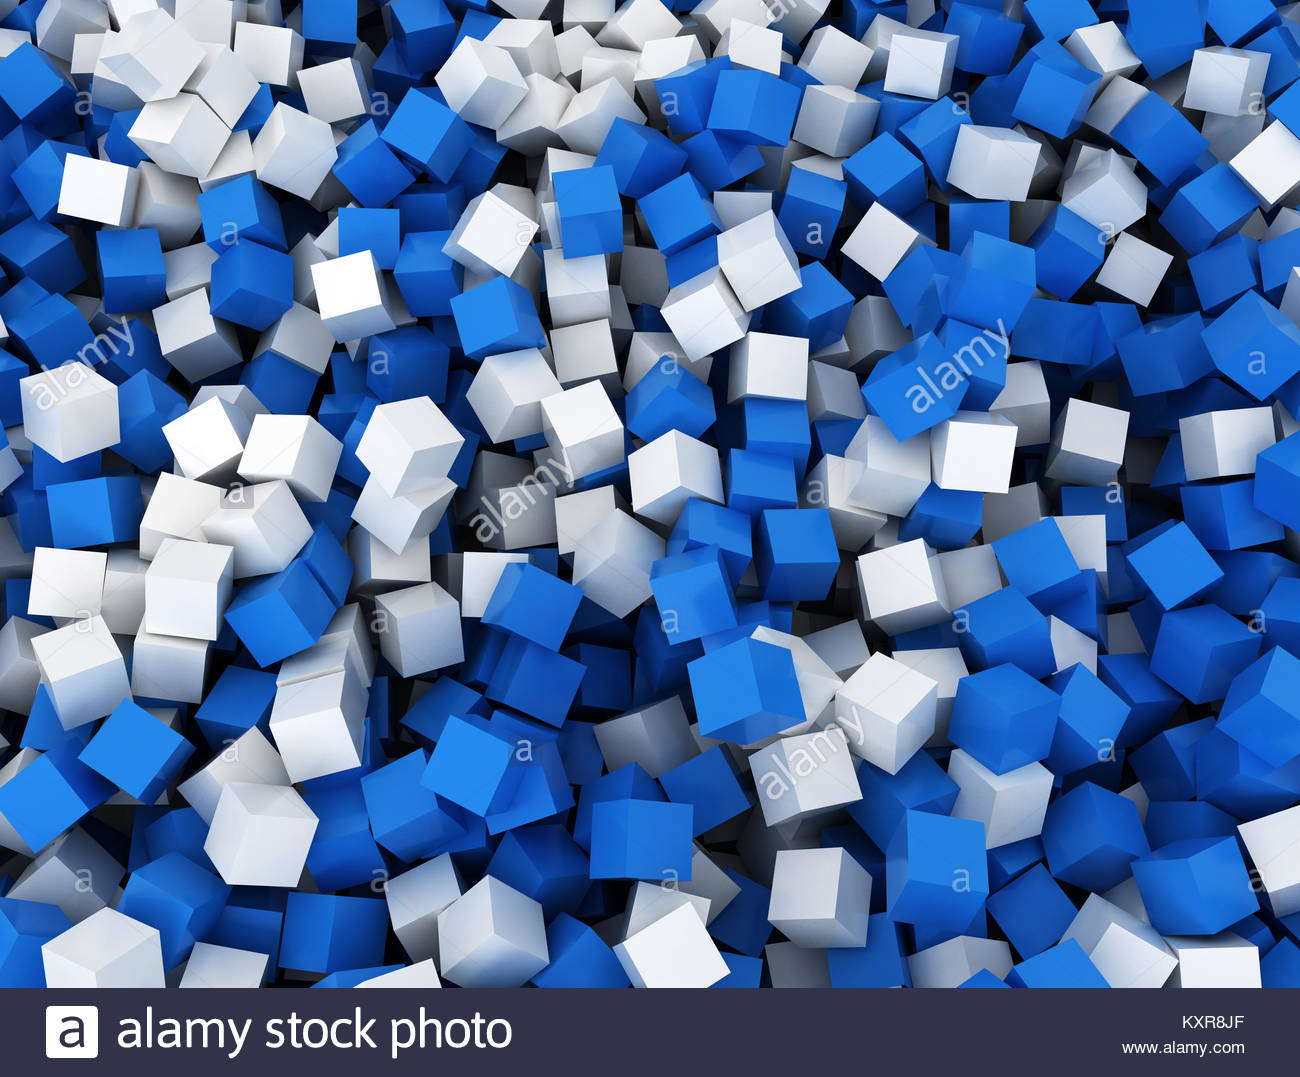 Blue And White Cubes Background 3d Rendering Desktop Wallpaper